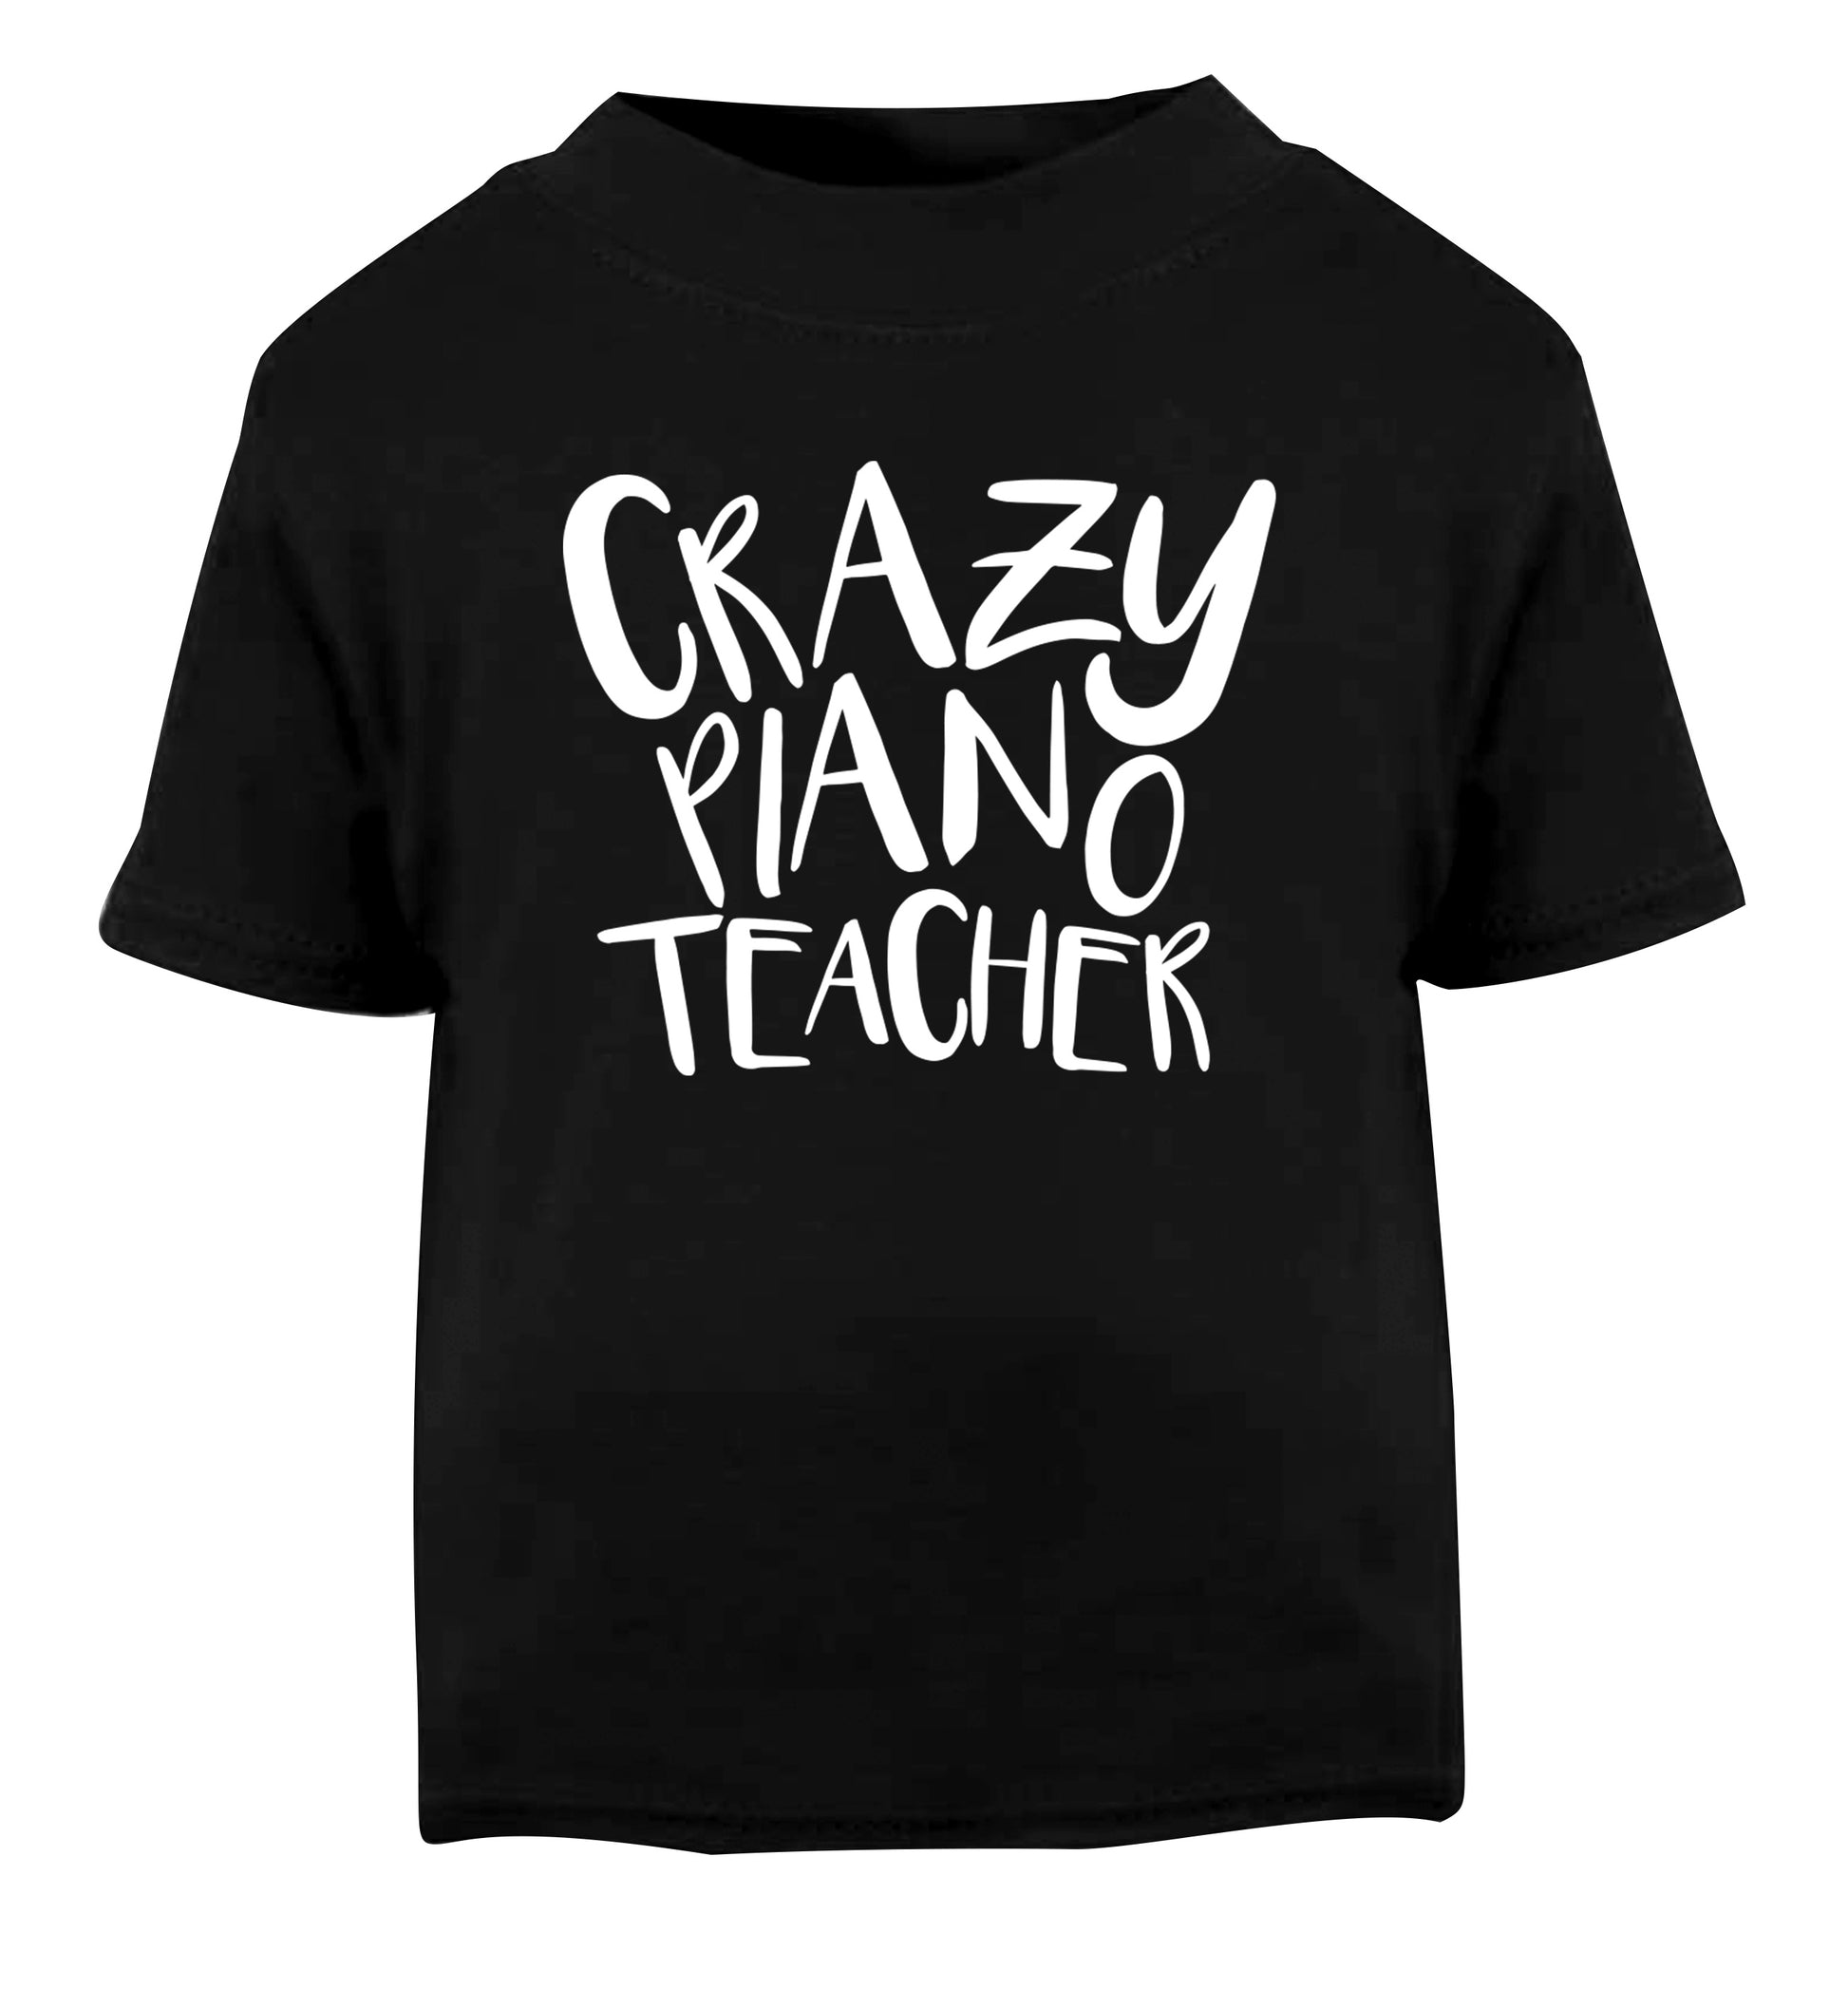 Crazy piano teacher Black Baby Toddler Tshirt 2 years